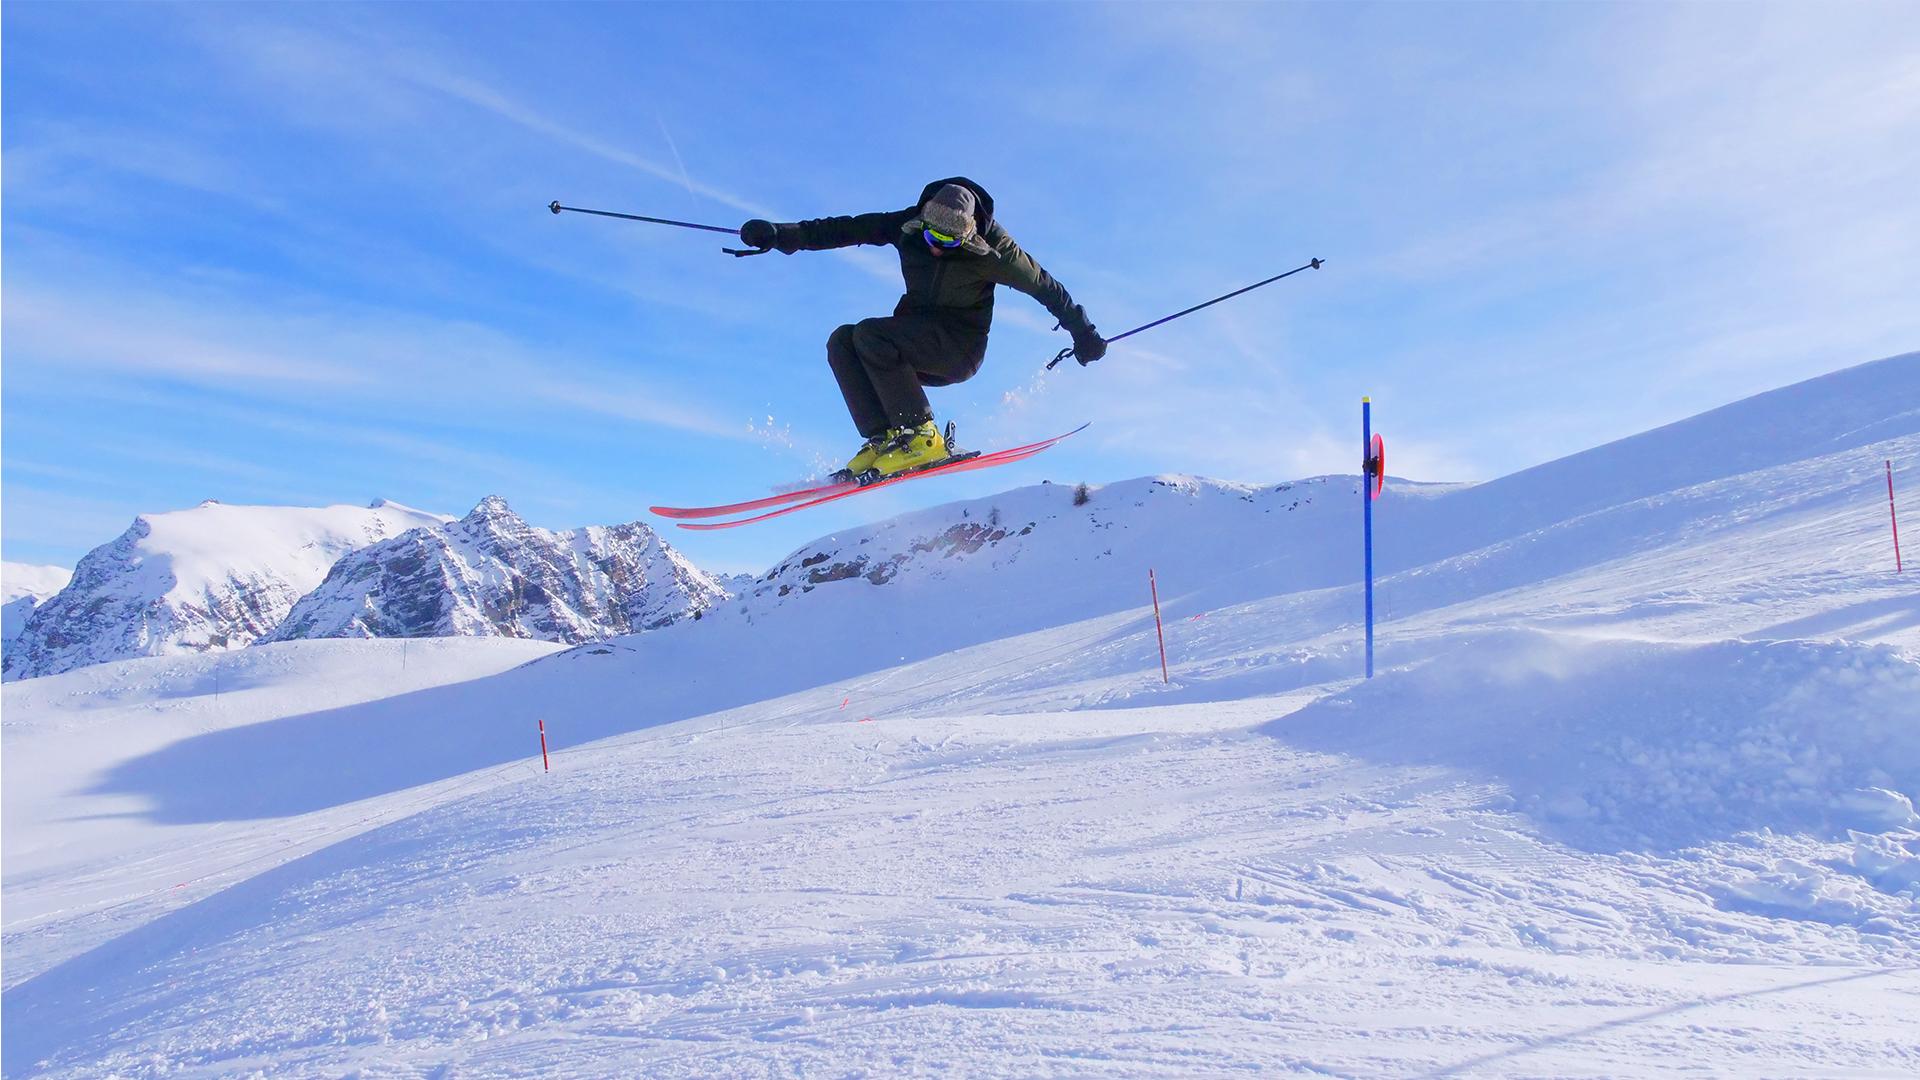 skiort Montgenèvre